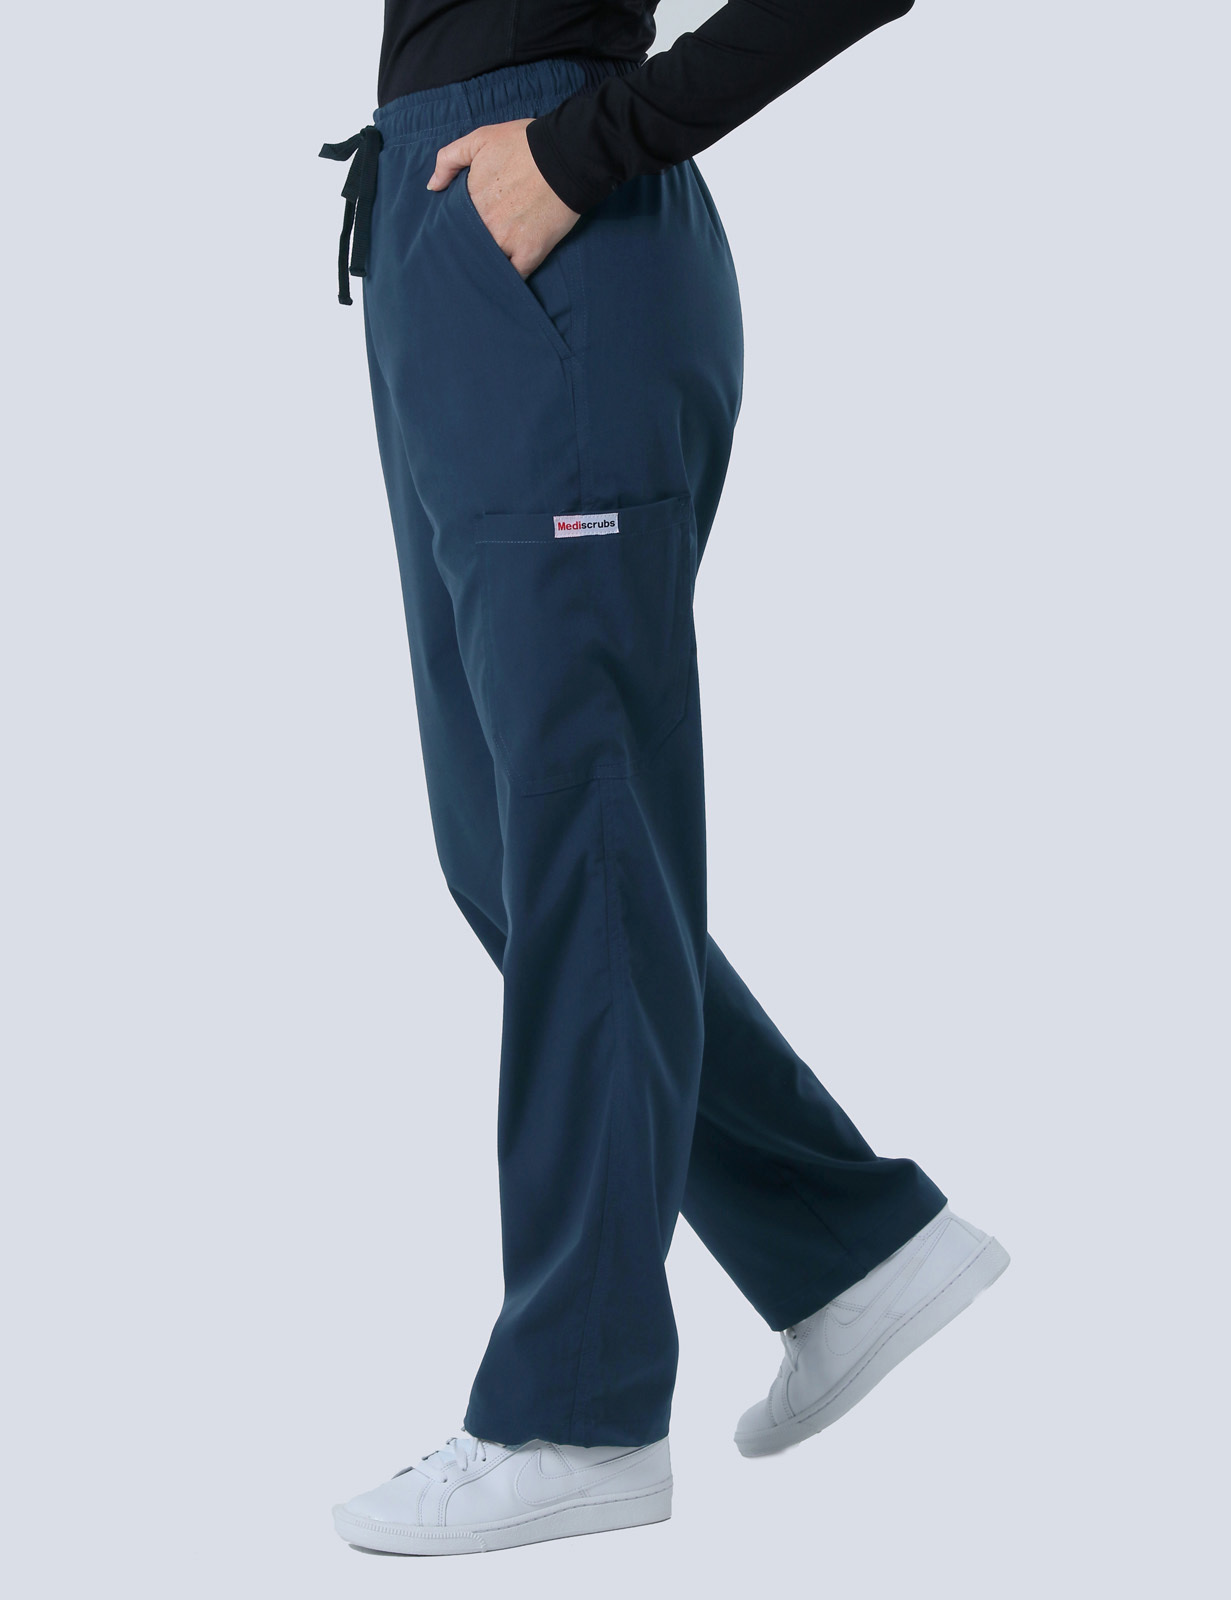 Weipa Hospital - ED EEN (4 Pocket Scrub Top and Cargo Pants in Navy incl Logos)